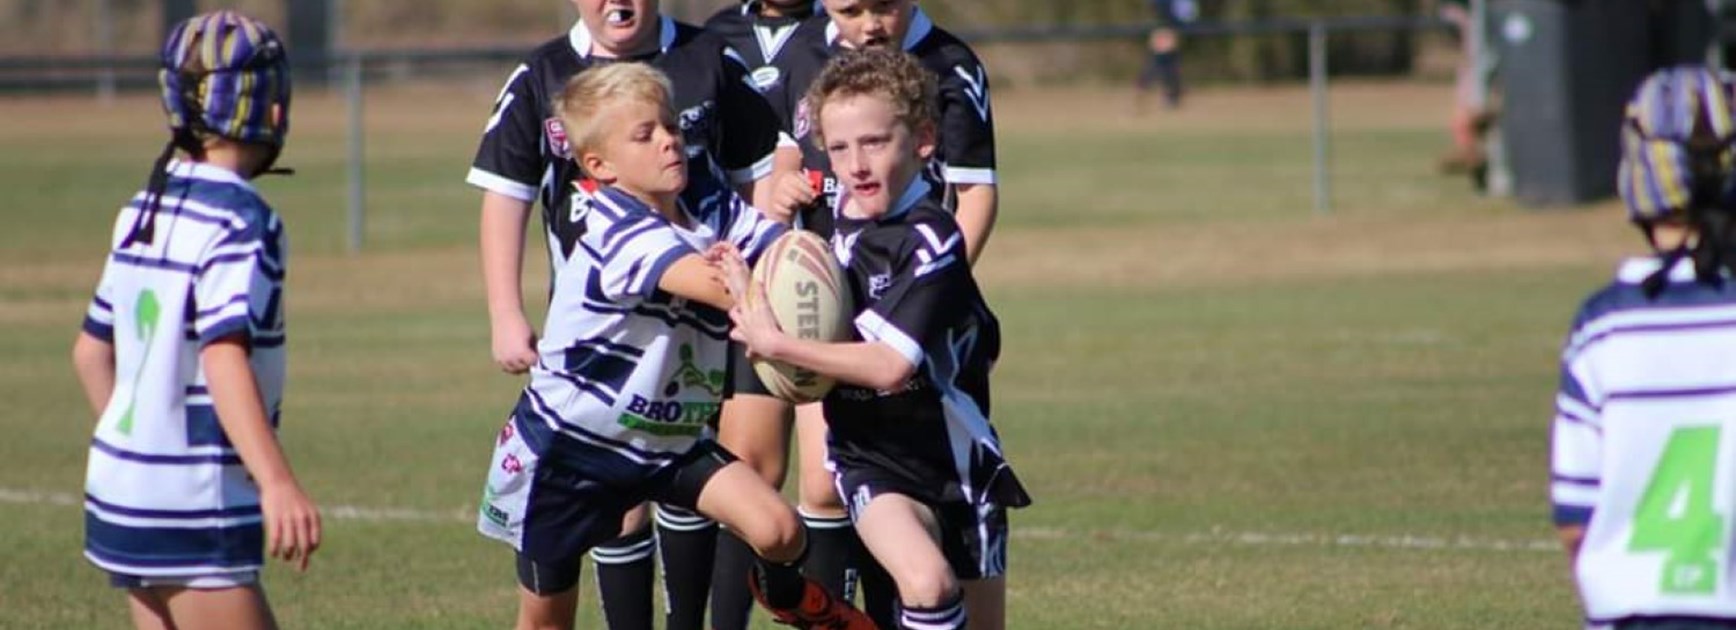 Bundaberg Junior Rugby League keen to press ahead